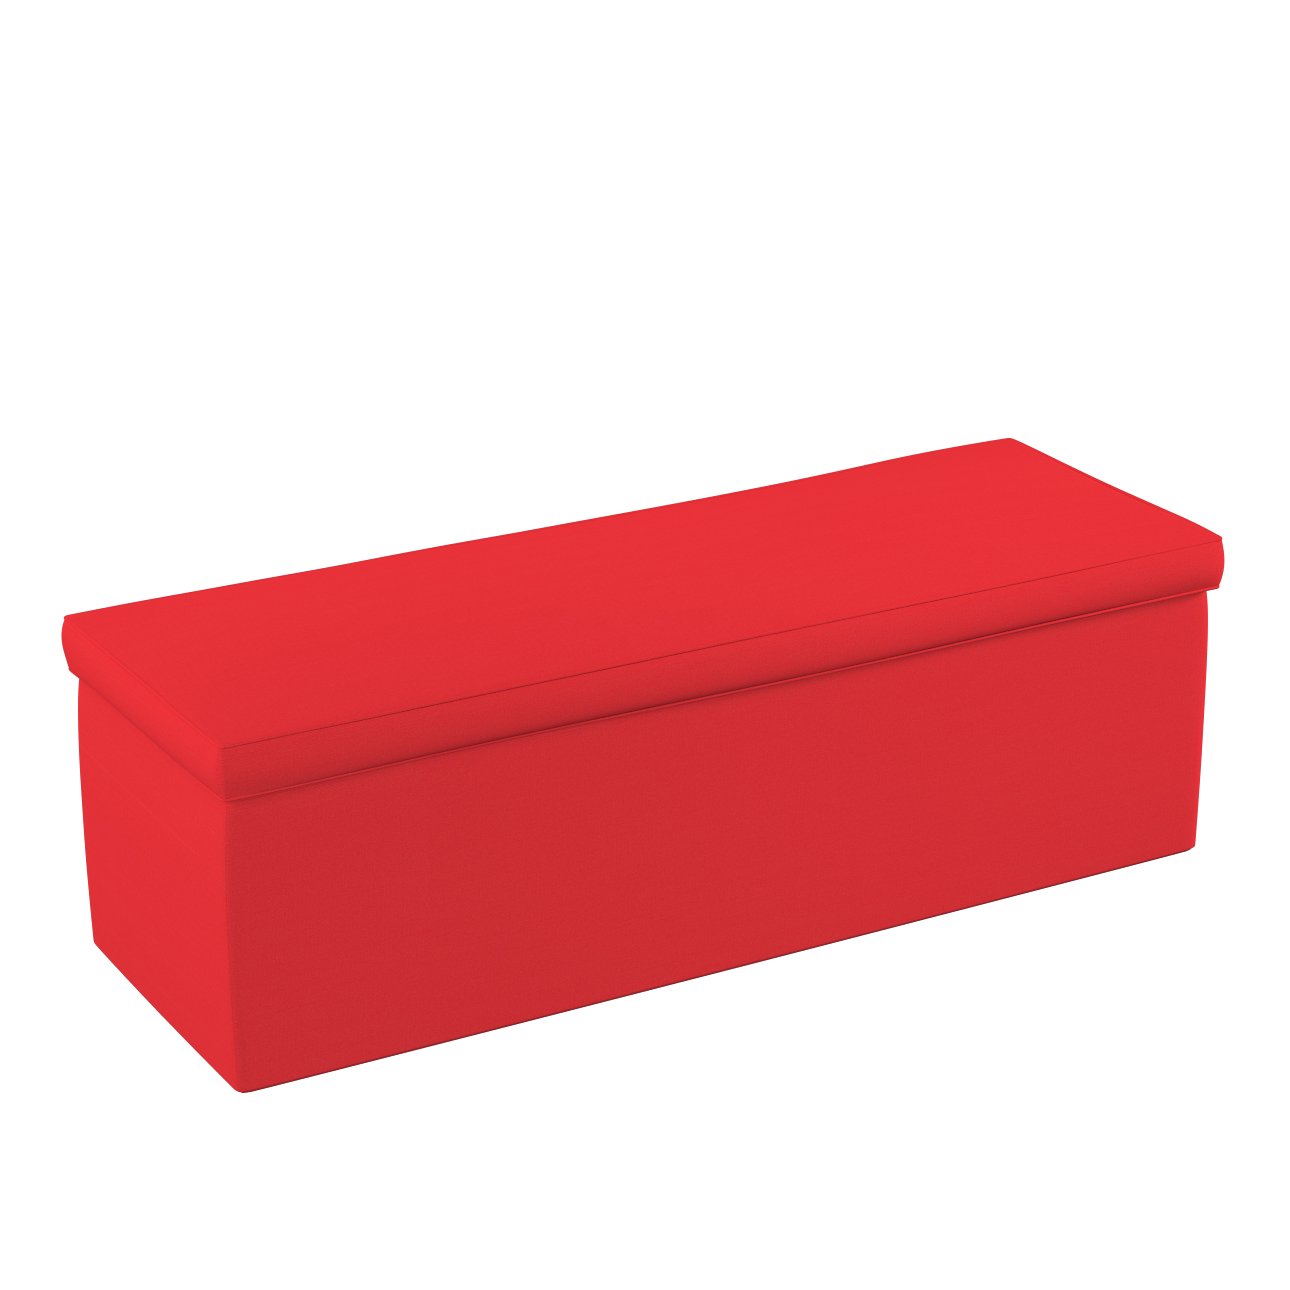 Dekoria Čalouněná skříň, červená, 90 x 40 x 40 cm, Loneta, 133-43